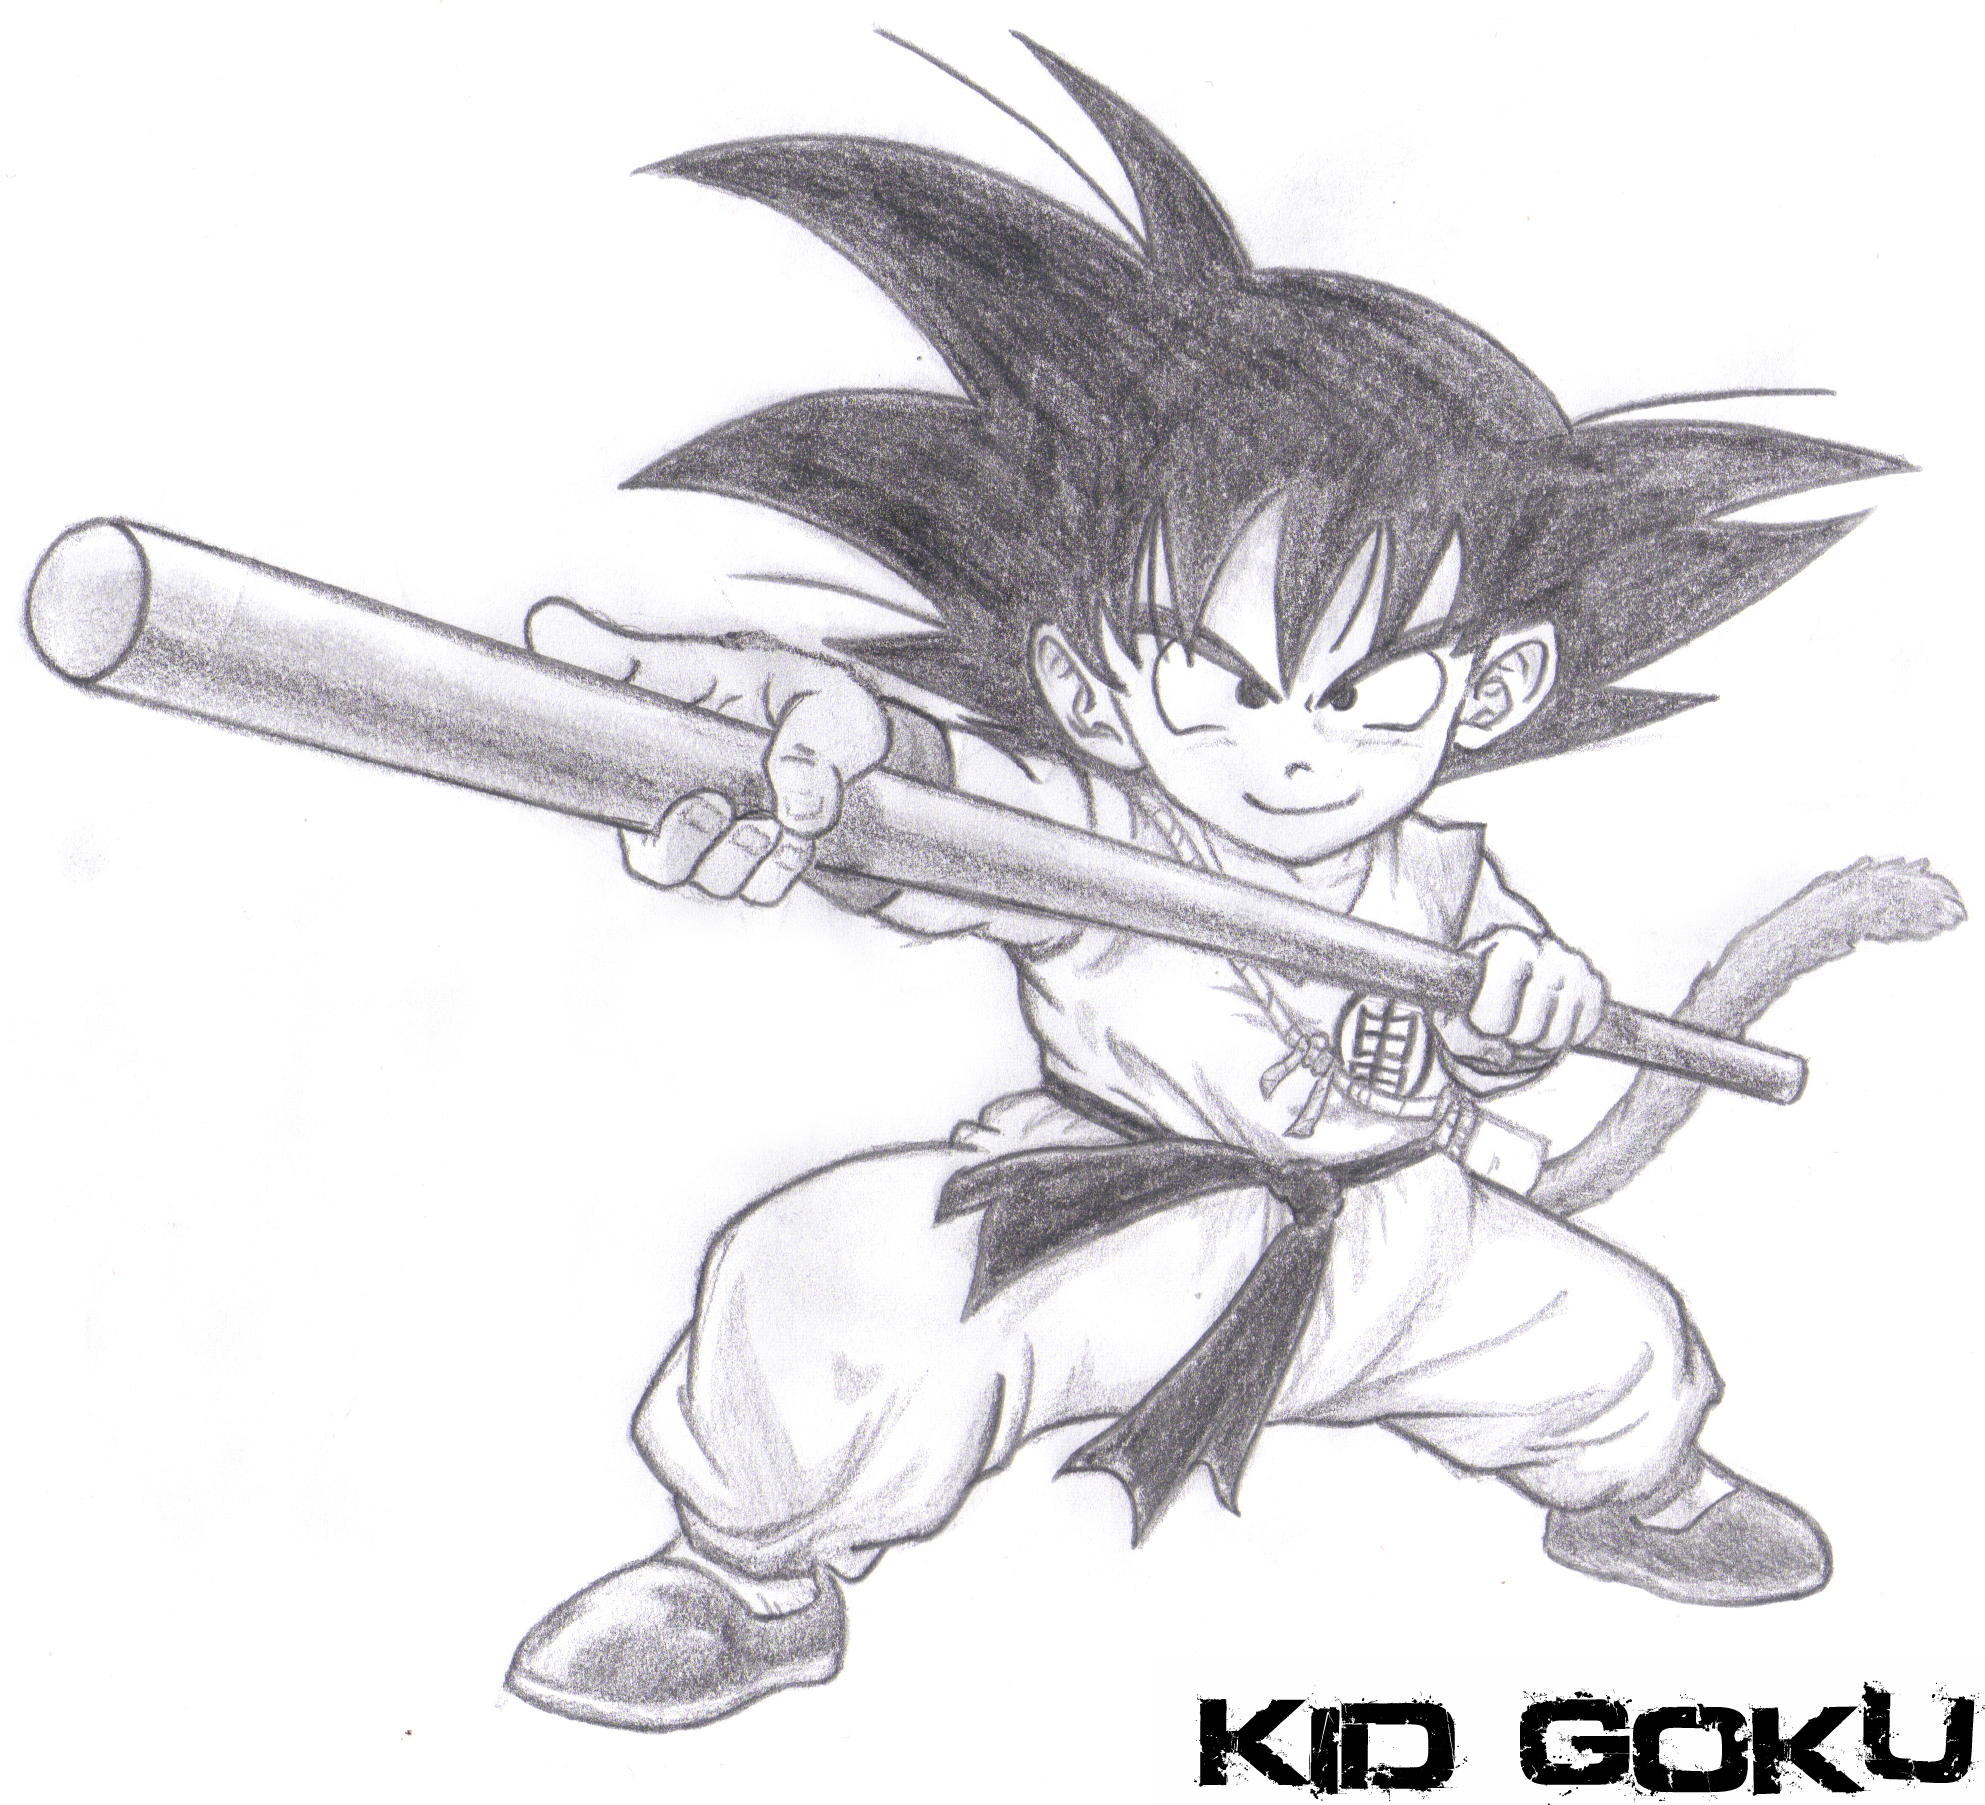 Kid Goku (pencil drawing) by iiHurricane on DeviantArt